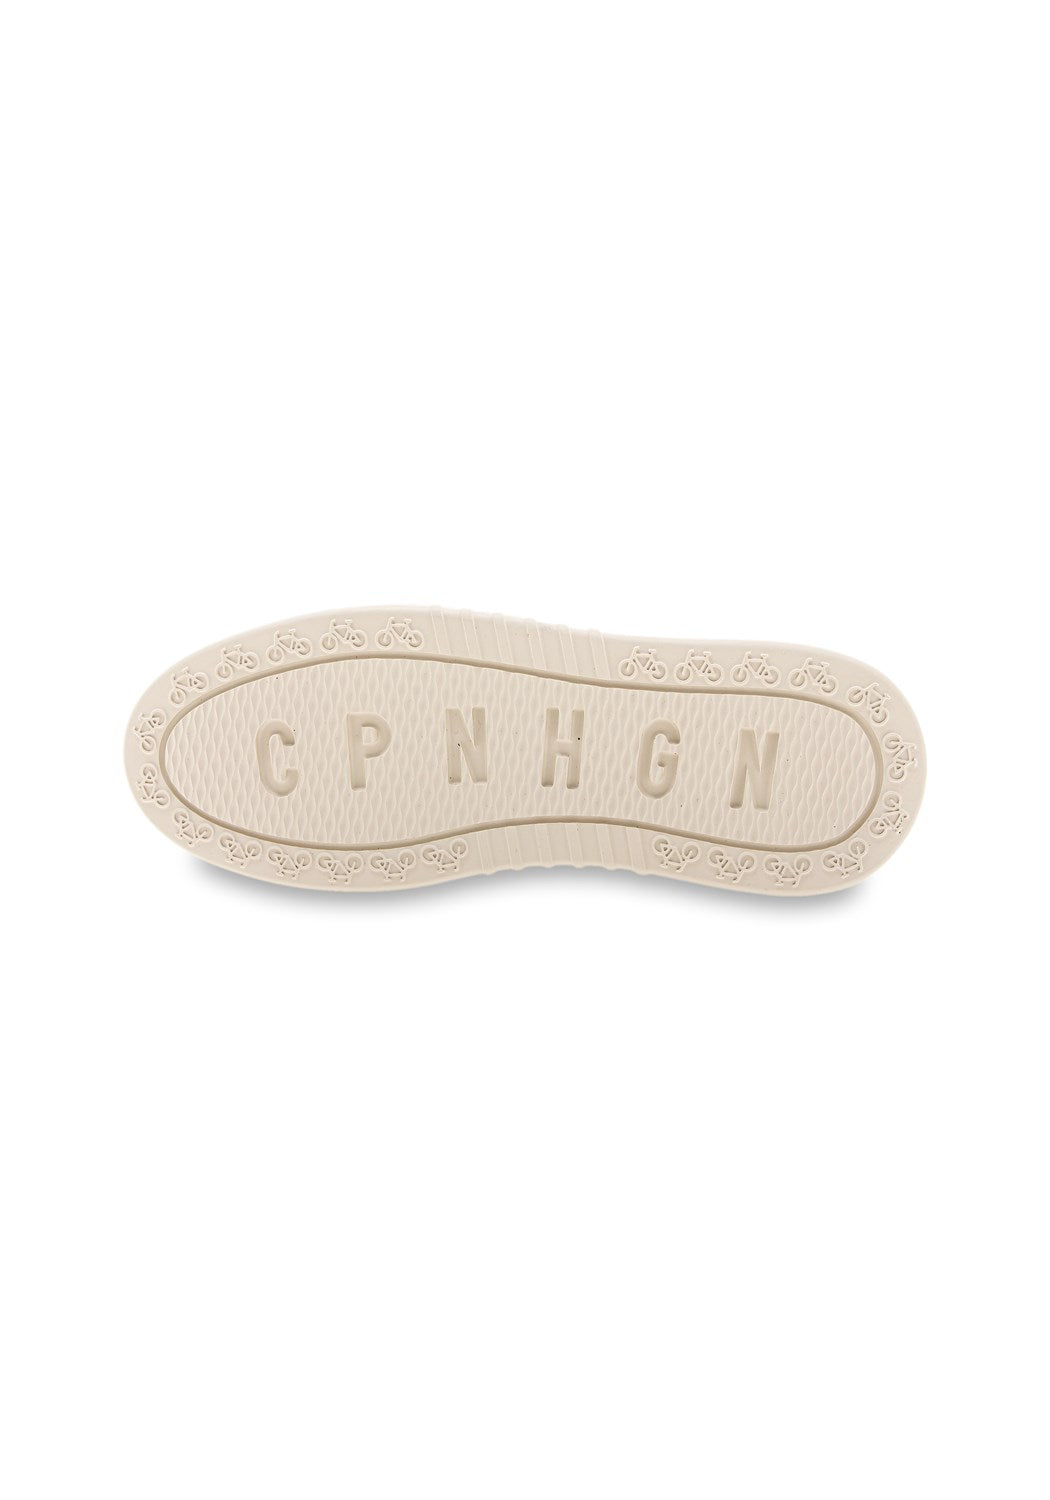 CPH1M leather mix off white | Bildmaterial bereitgestellt von SHOES.PLEASE.